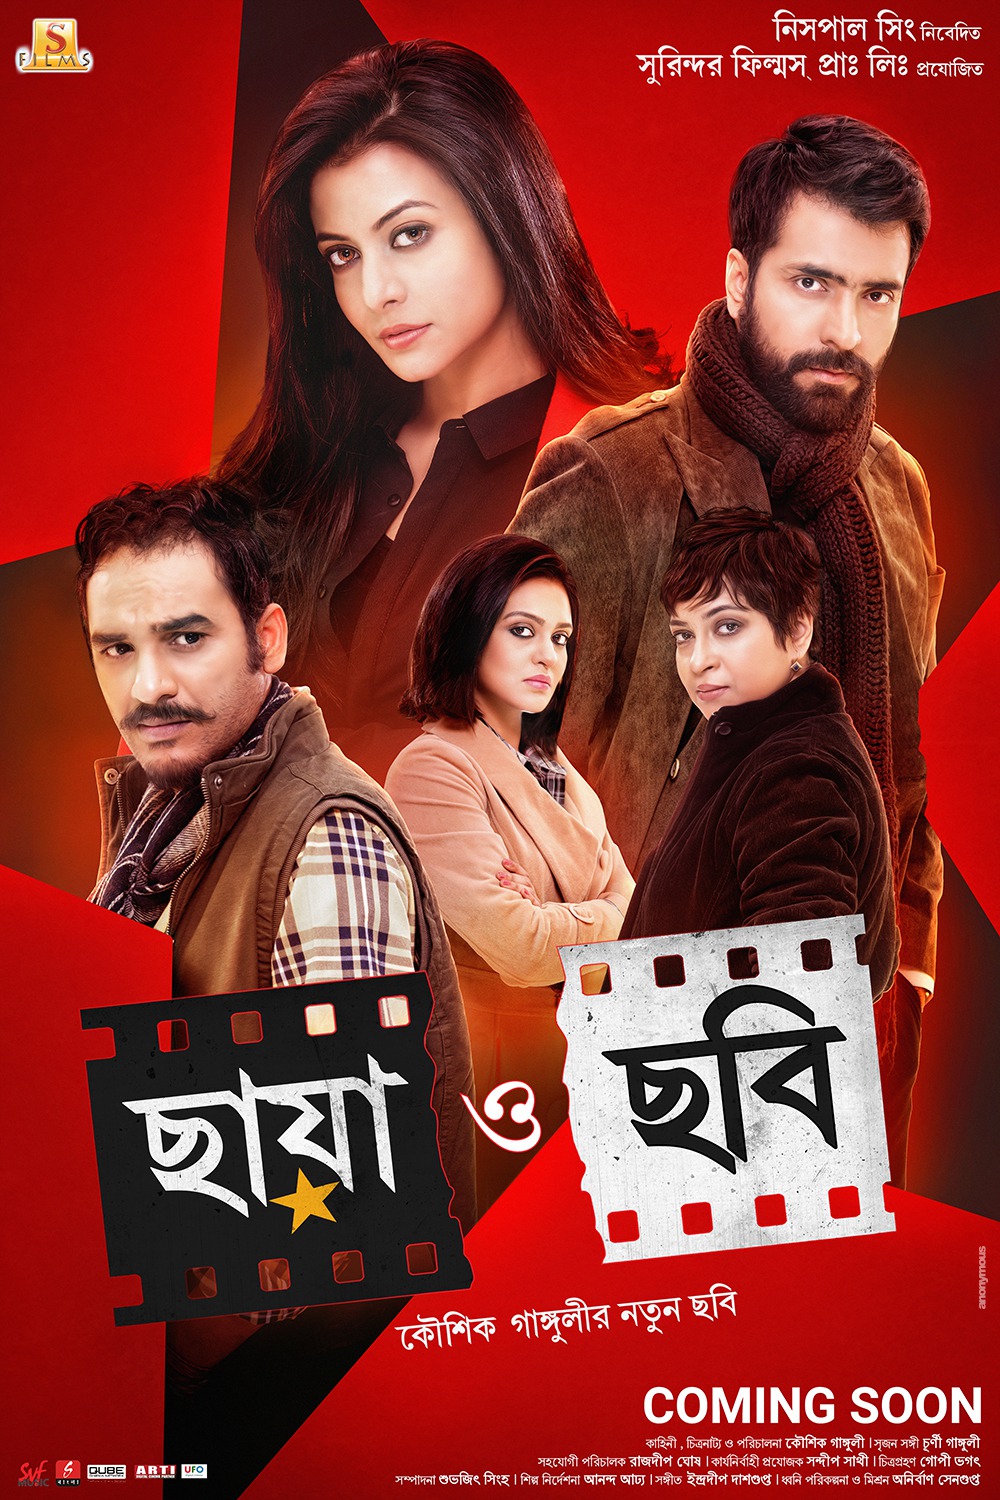 Extra Large Movie Poster Image for Chhaya O Chhobi (#2 of 4)